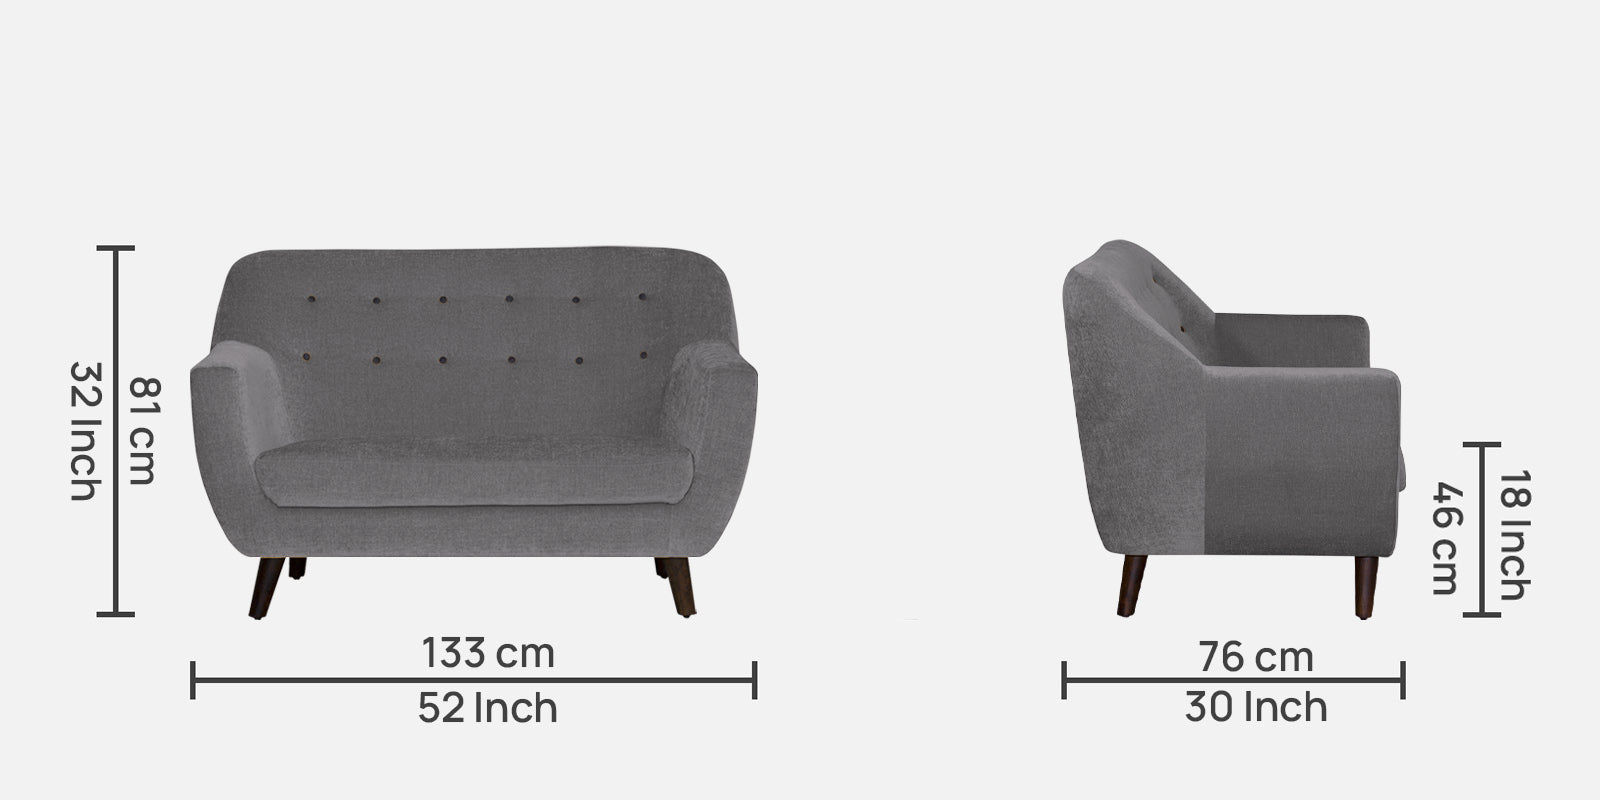 German Fabric 2 Seater Sofa in sudo grey Colour